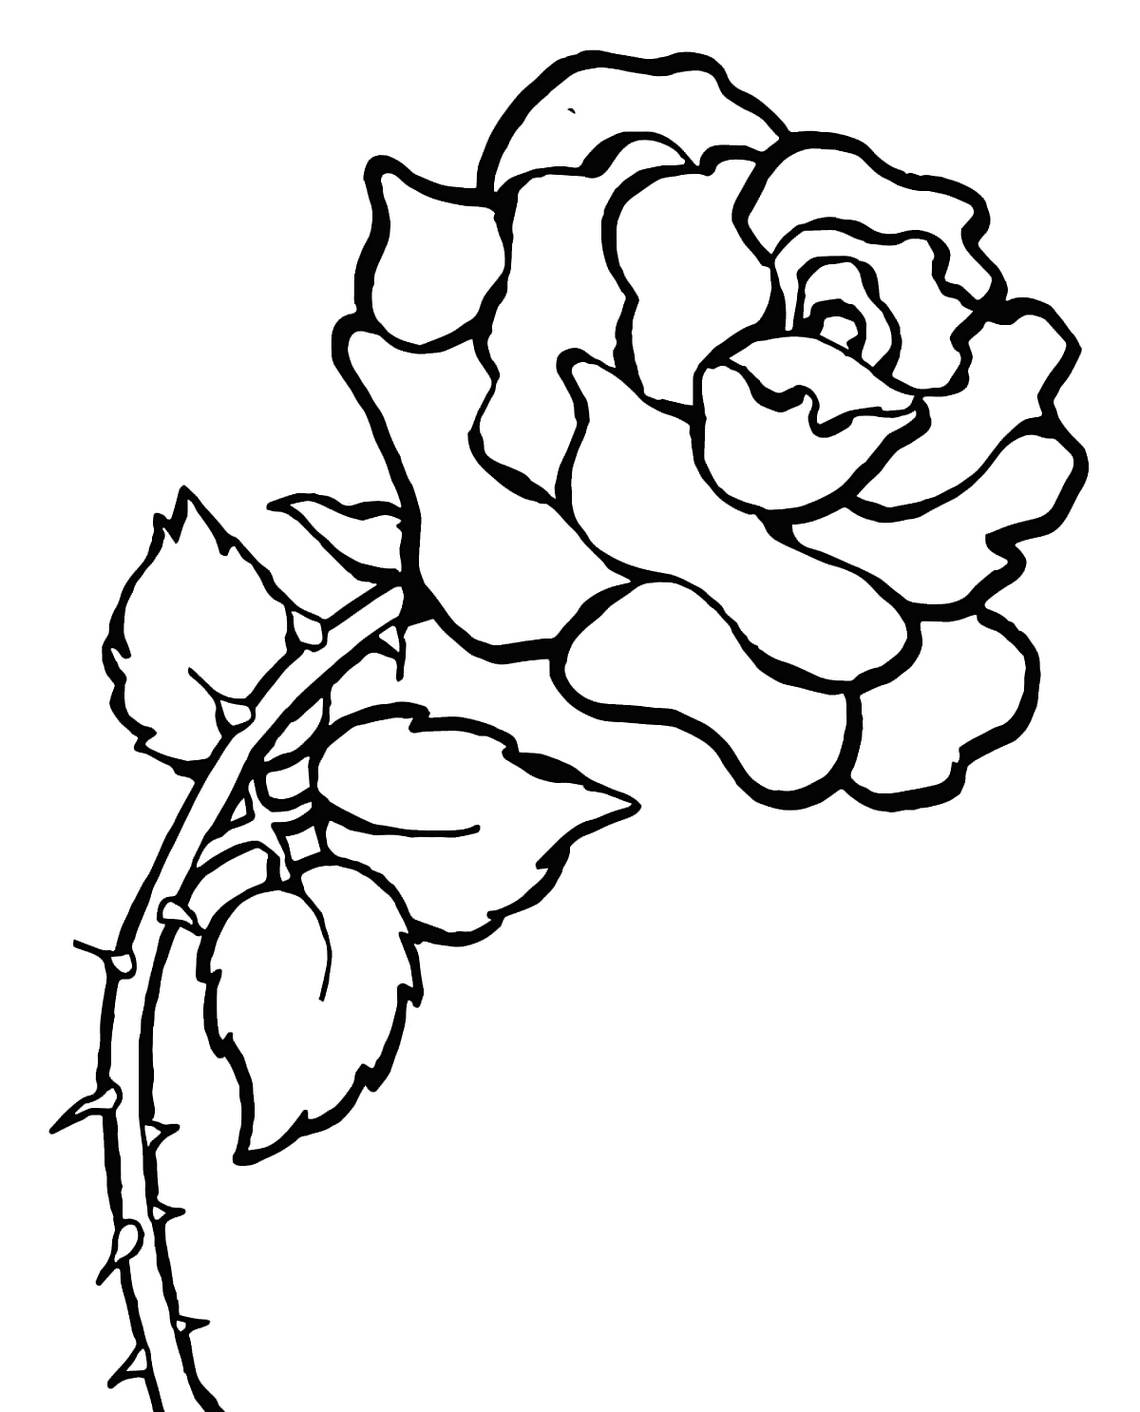 Kumpulan Gambar Kartun Bunga Mawar10 Jpg